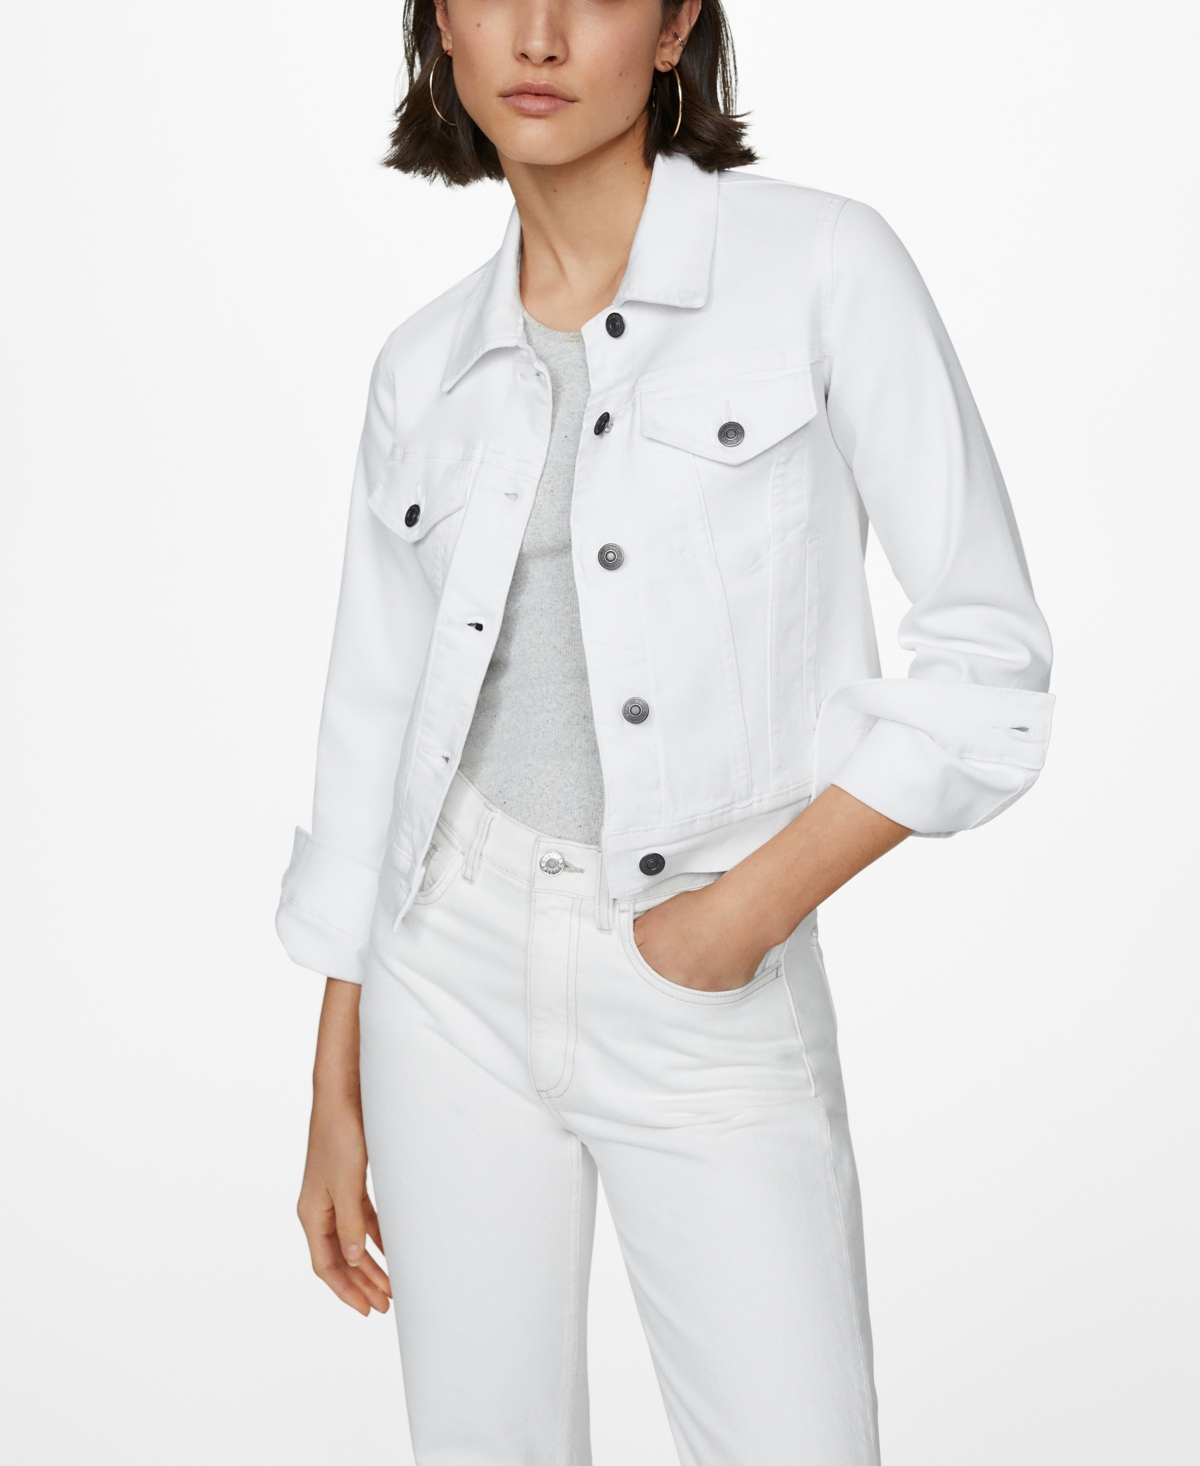 Women's Pocketed Denim Jacket - White